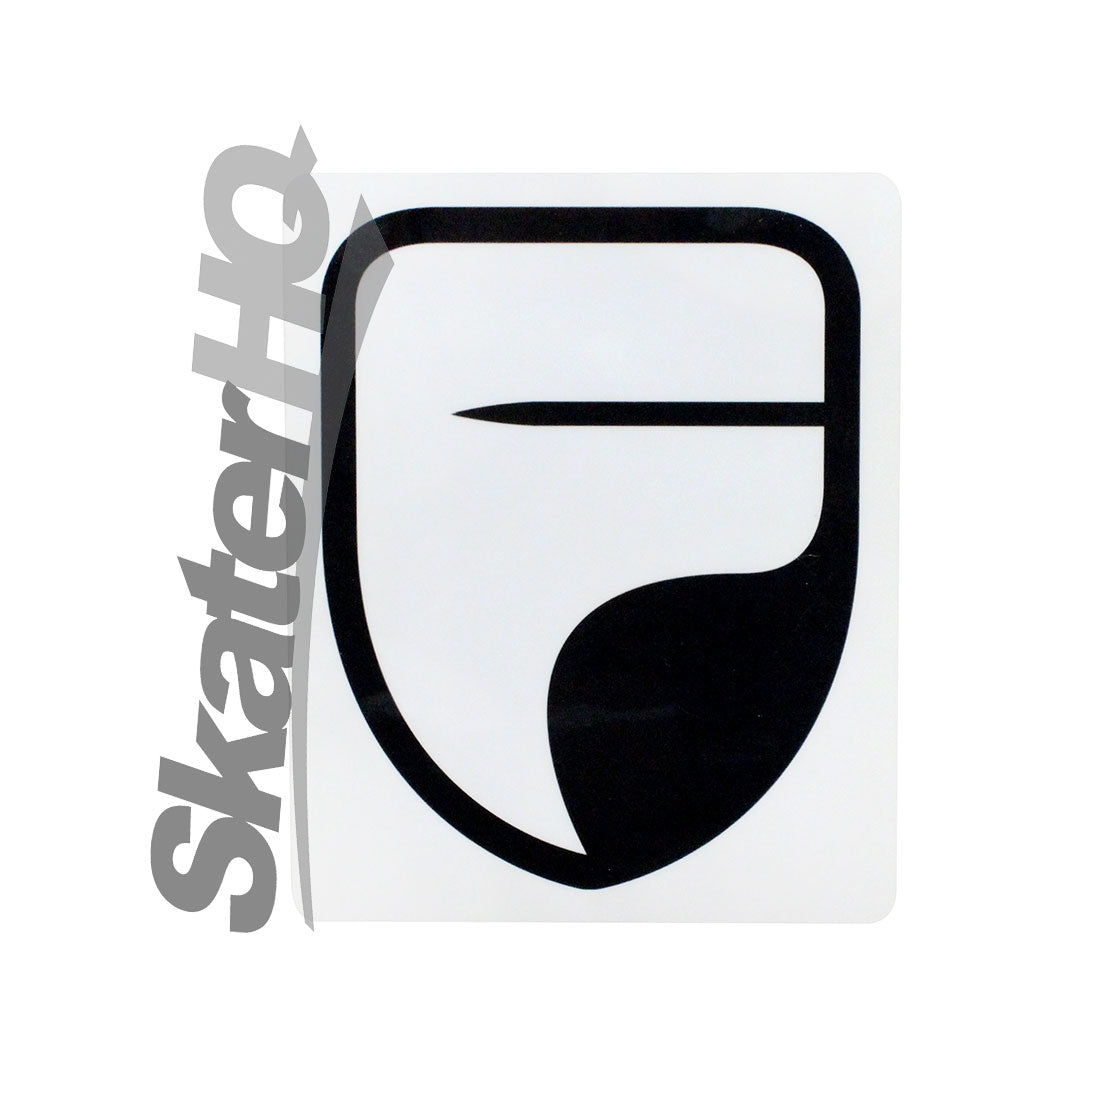 Fang F Logo CE Sticker - Black Stickers